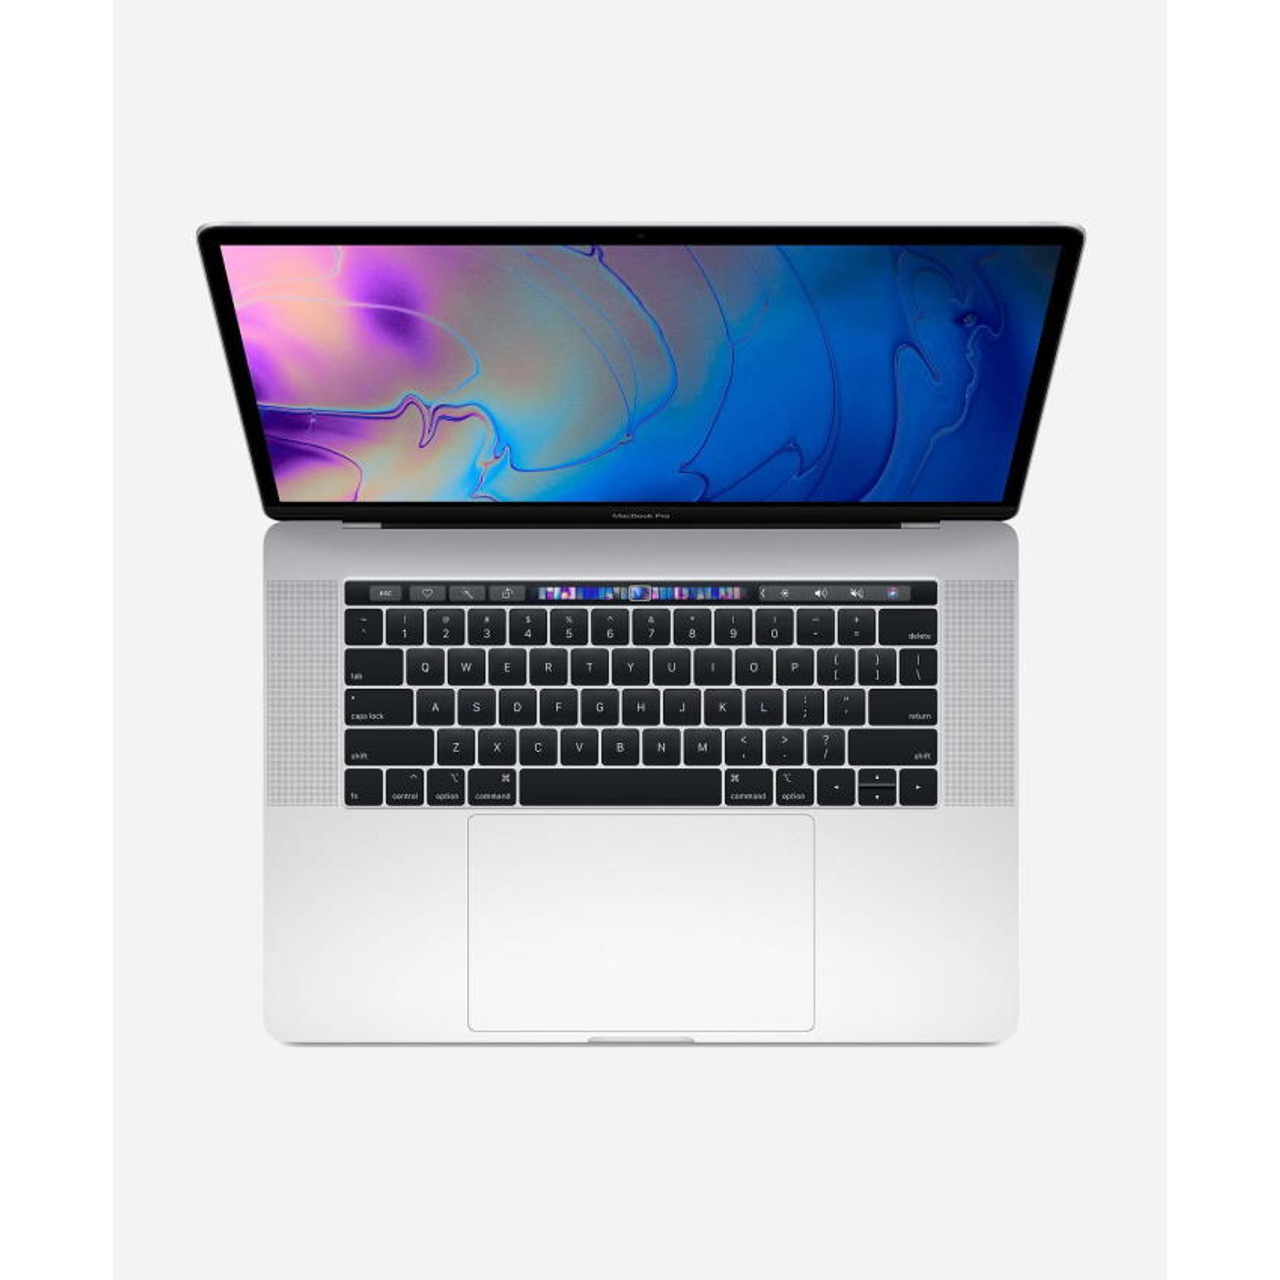 Apple MacBook Pro 15-Inch Laptop 2.6GHz i7 Six-Core 16GB RAM 256GB SSD  (Space Gray)